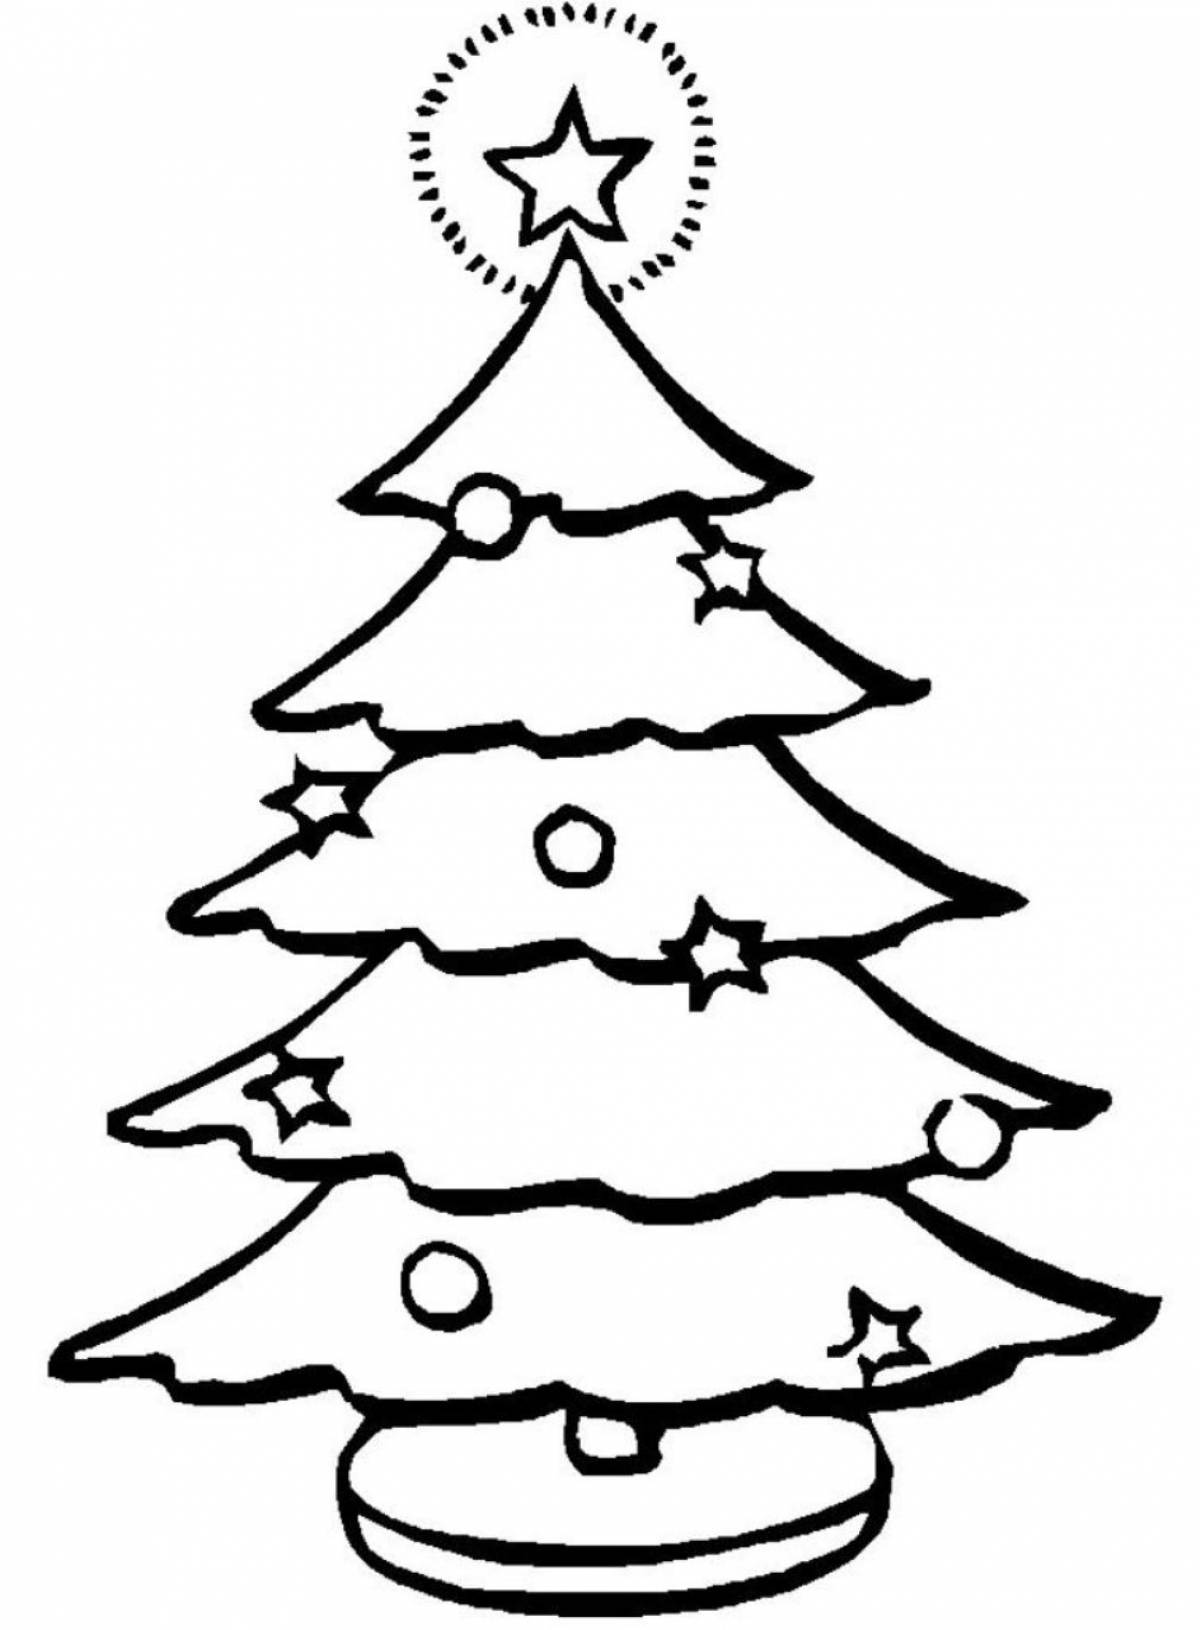 Shine Christmas tree